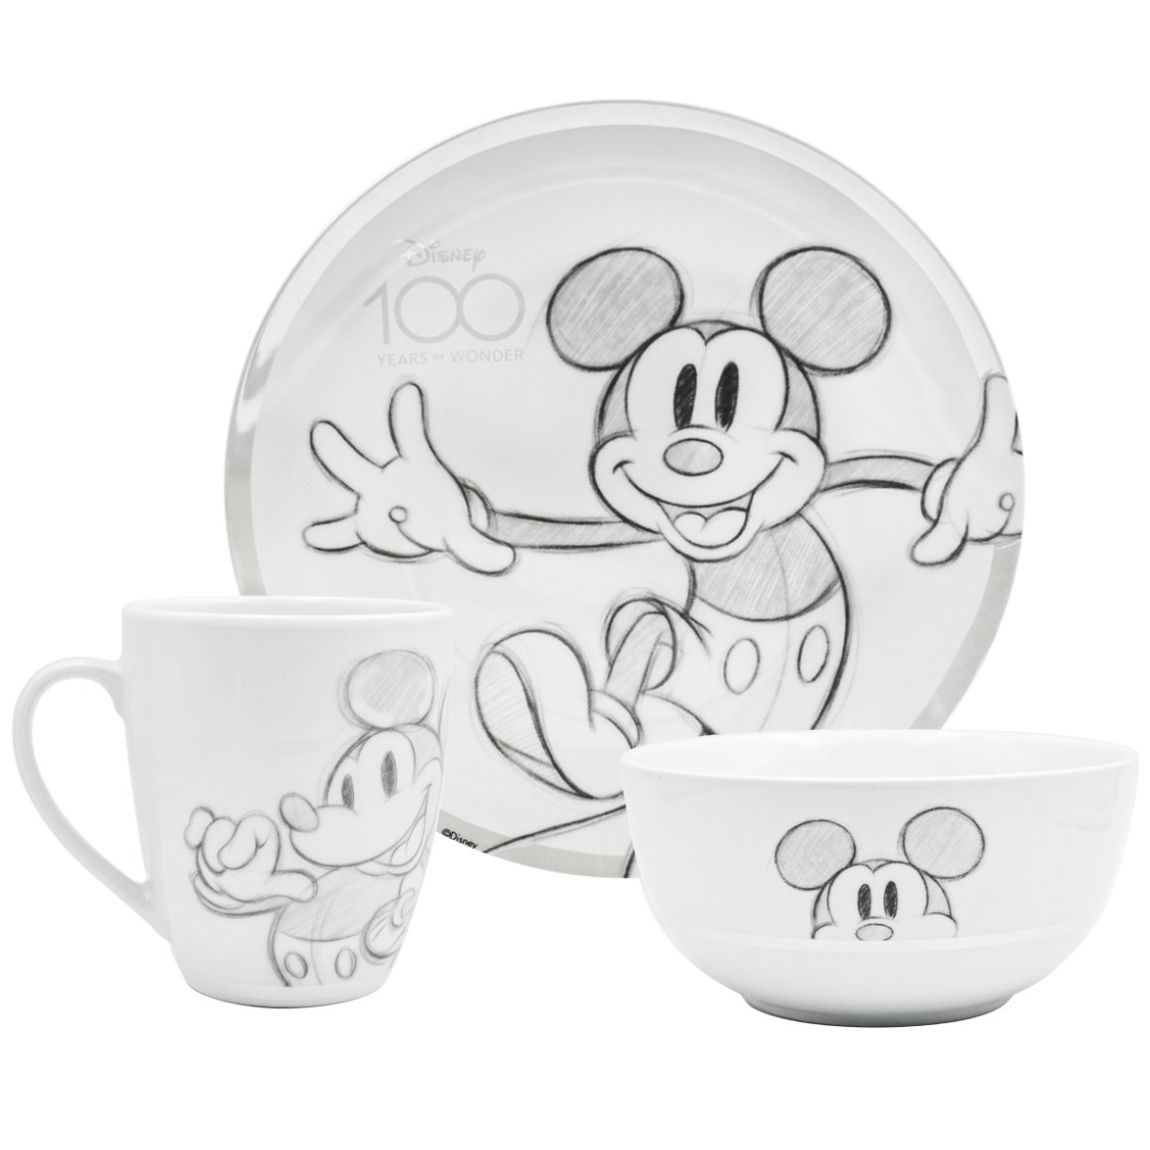 Vajilla Porcelana Mickey Minnie Mouse Disney 12pzas Original